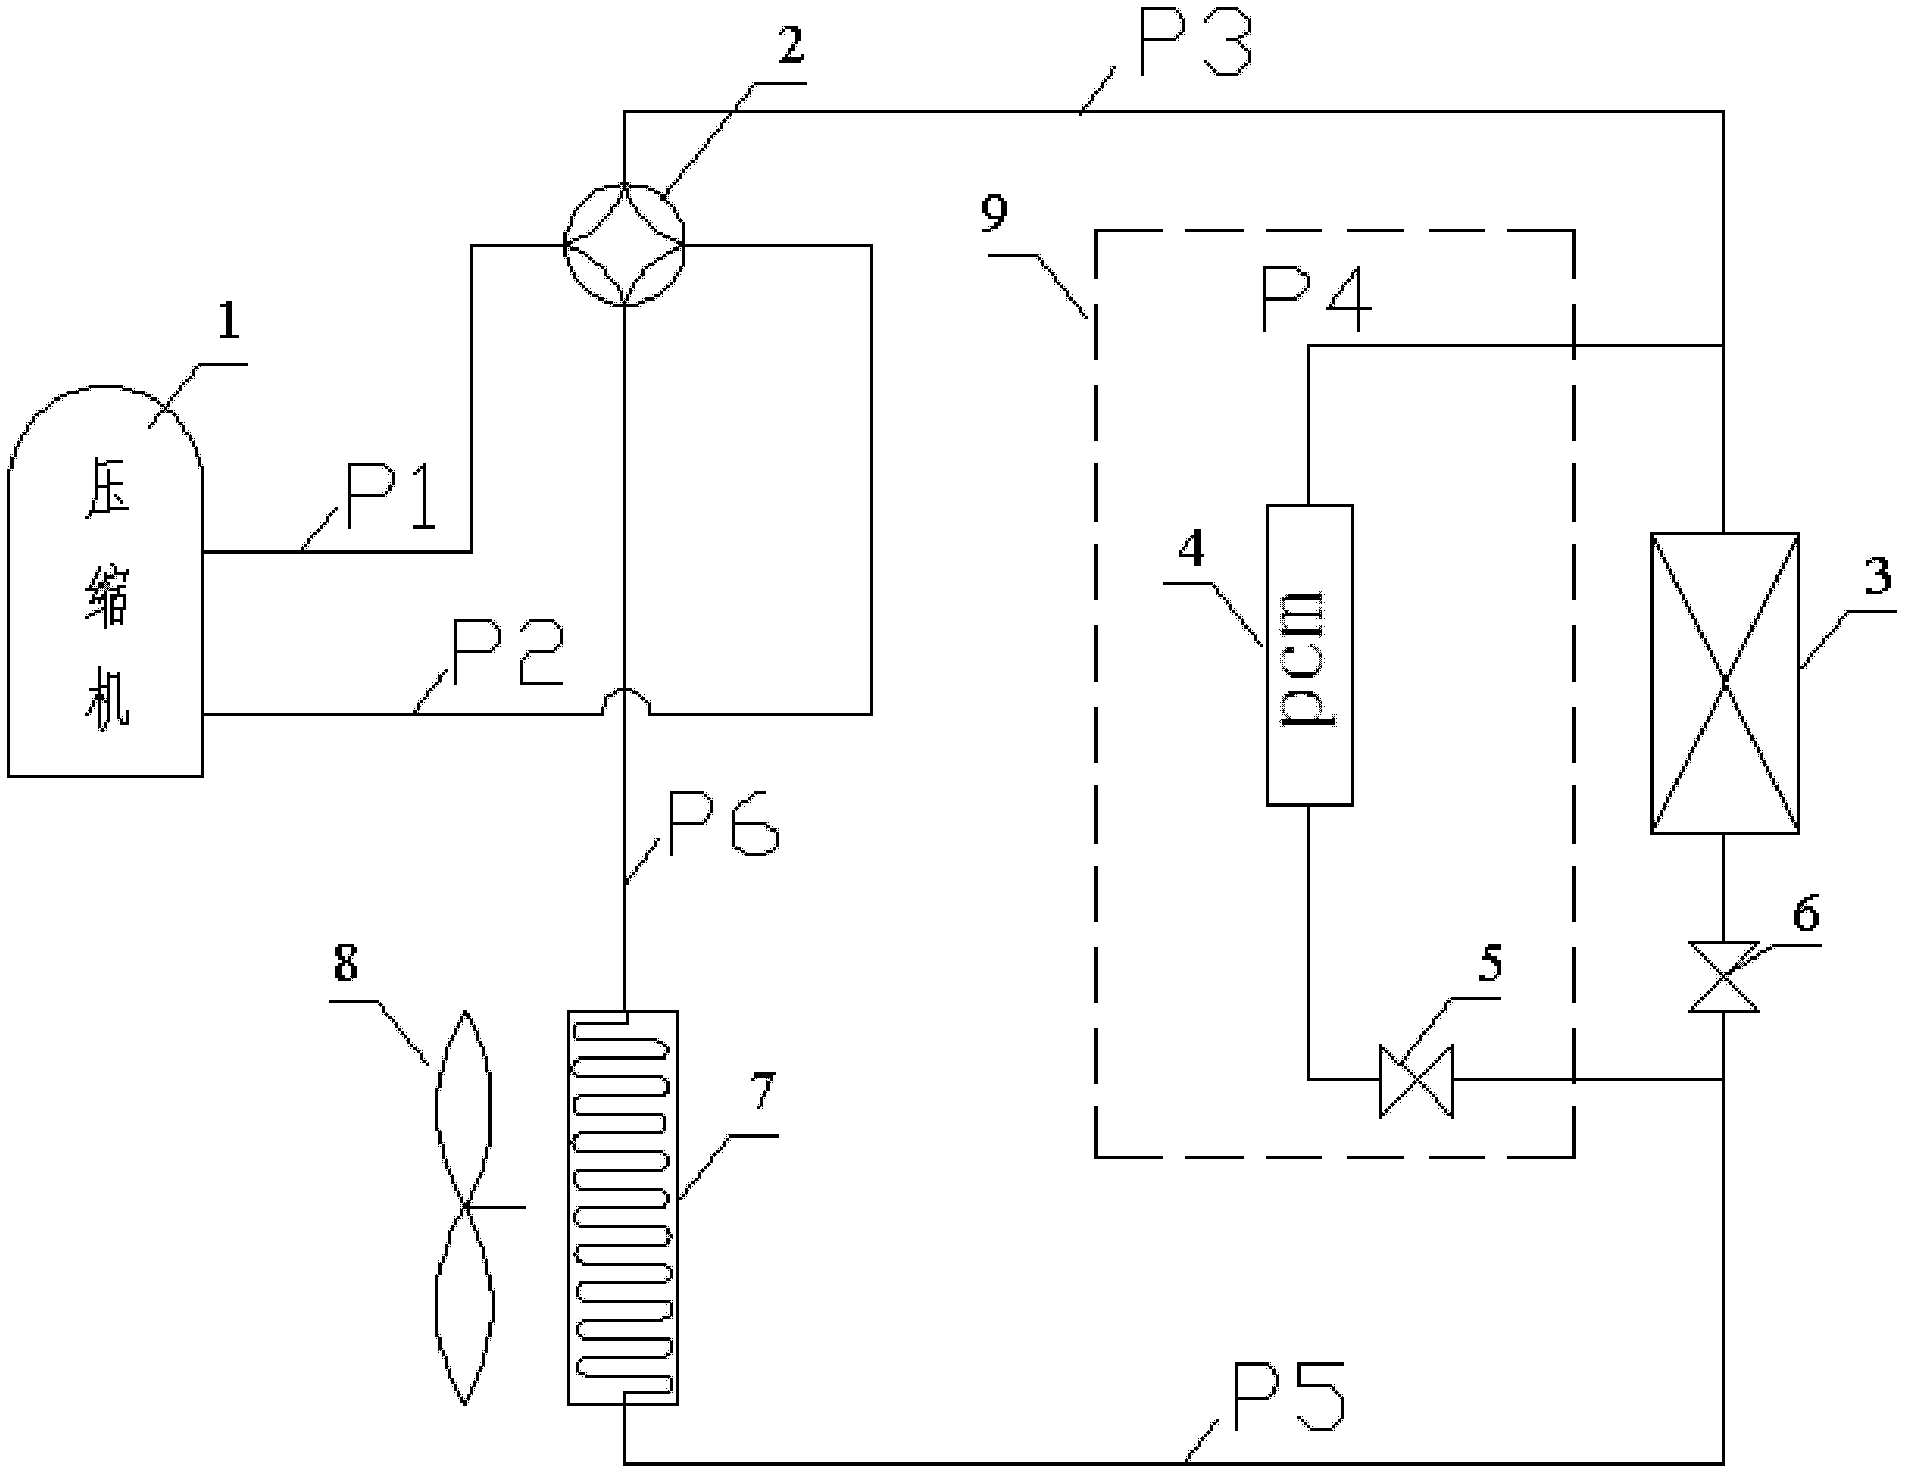 Heat pump defrosting system in winter